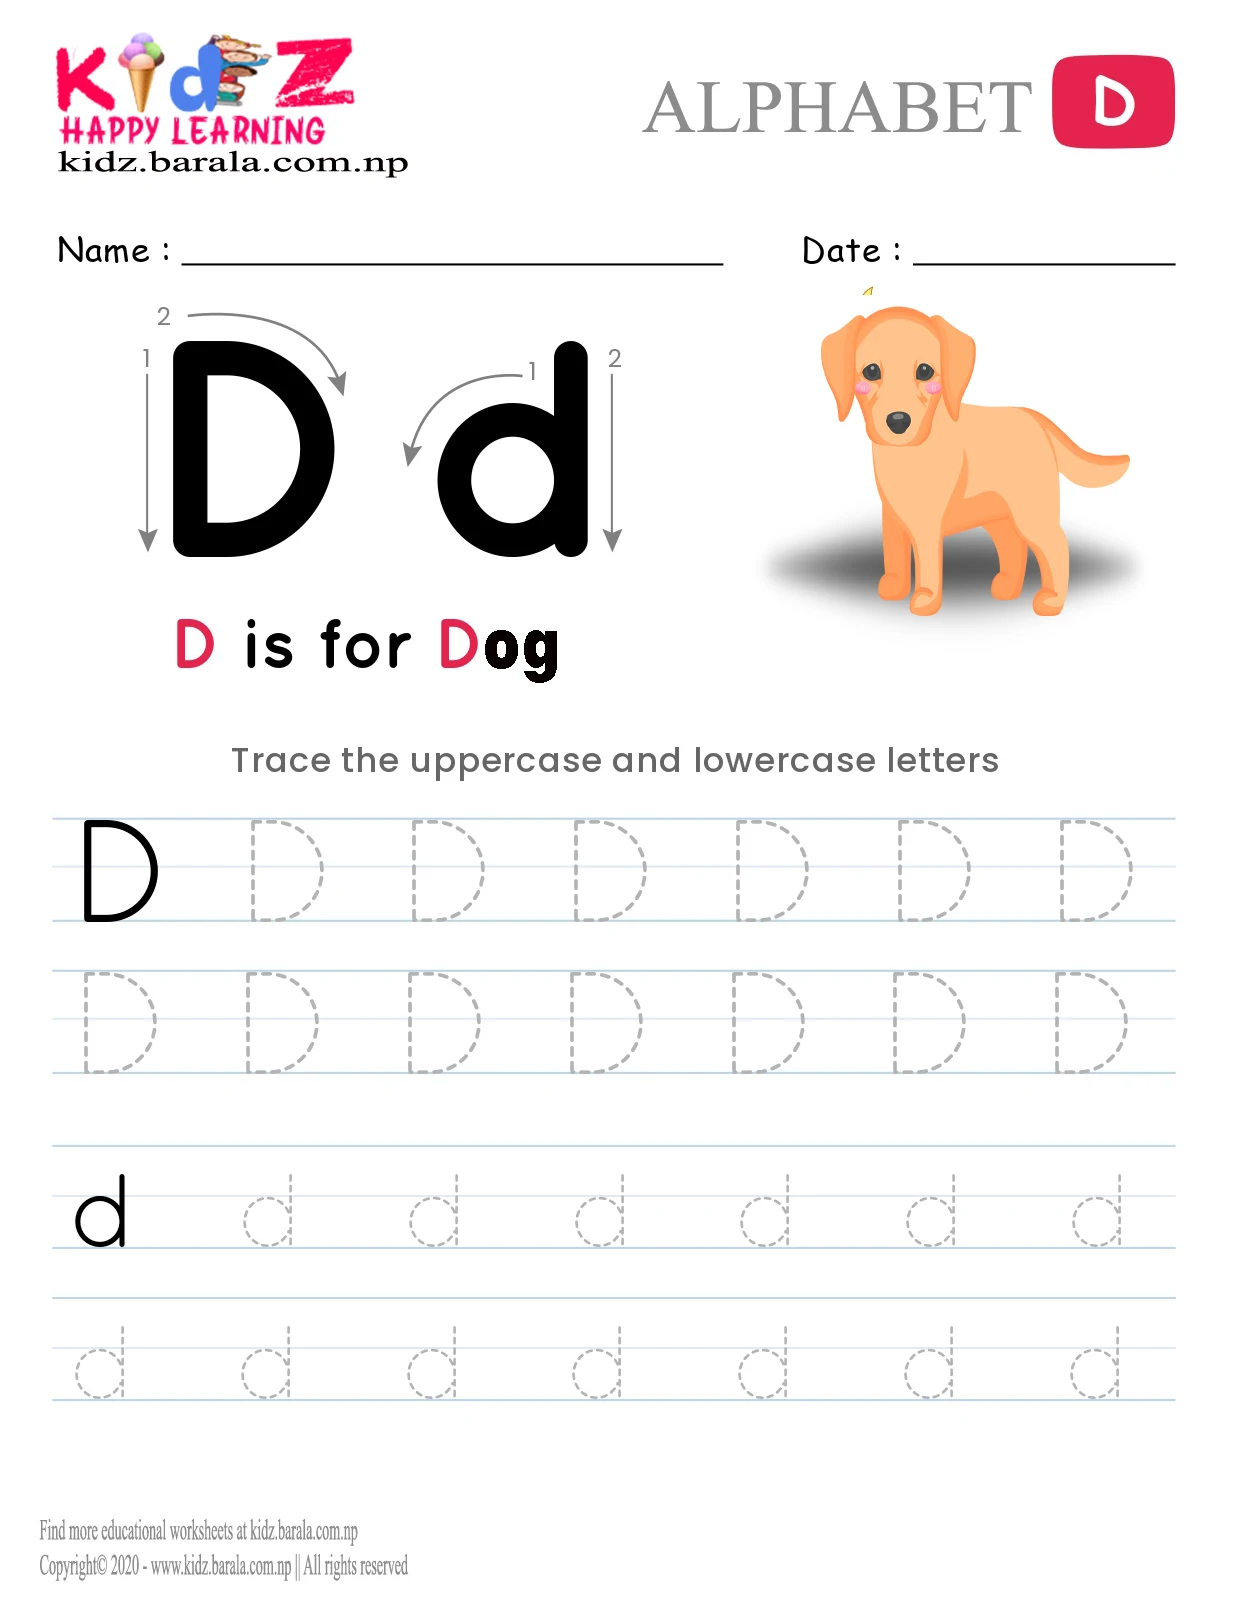 Alphabet D tracing worksheet free download .pdf